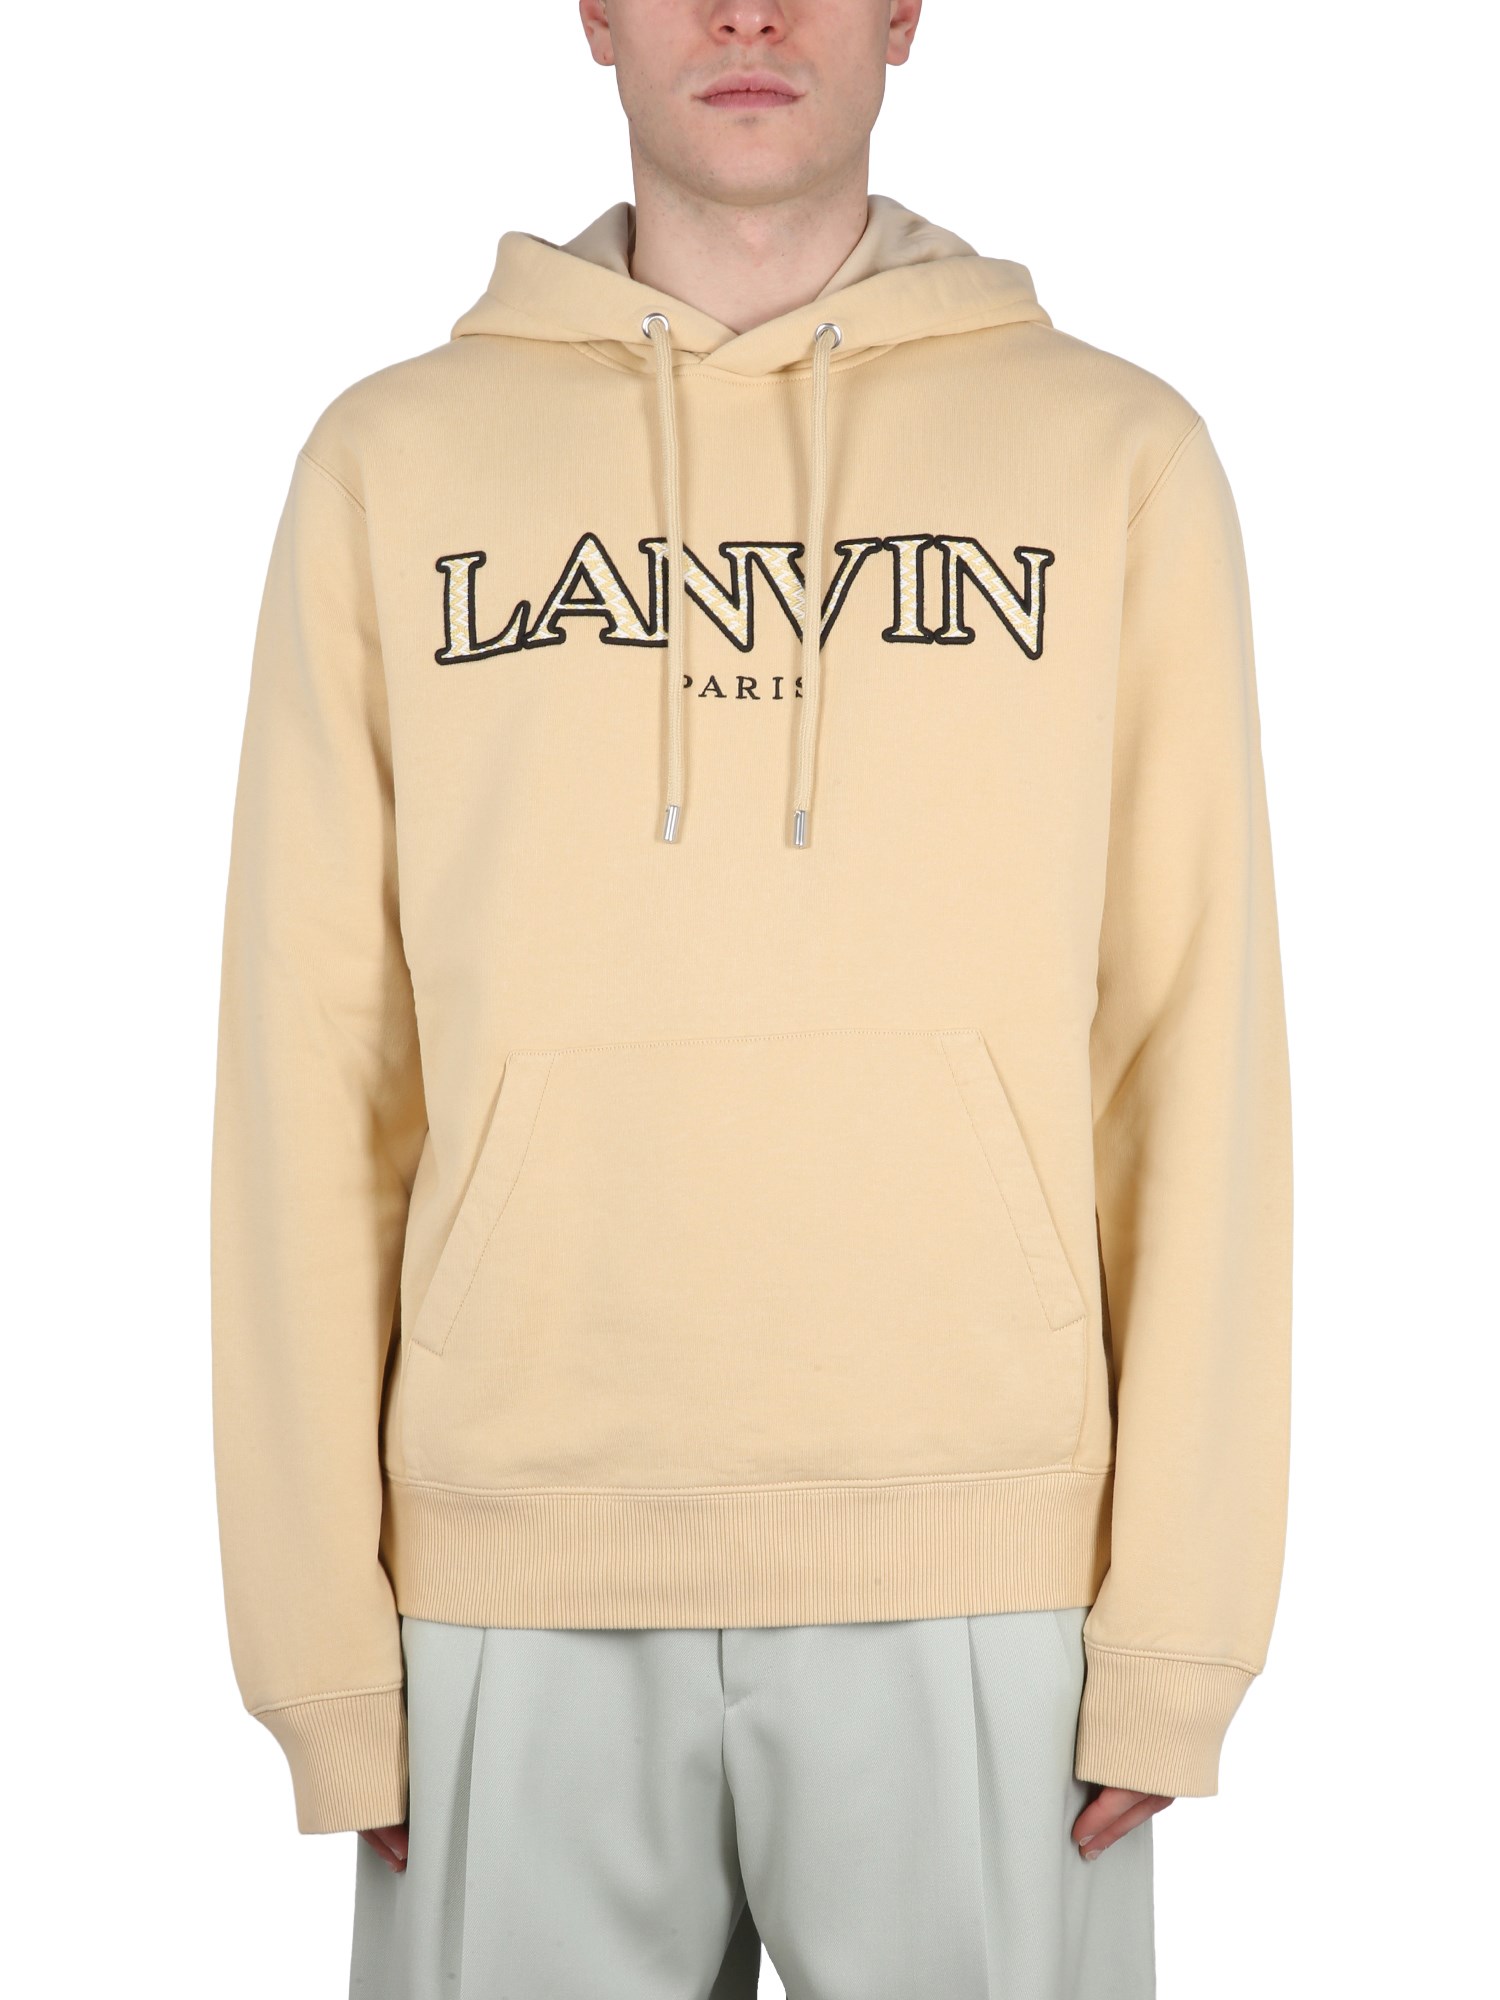 lanvin sweatshirt with logo